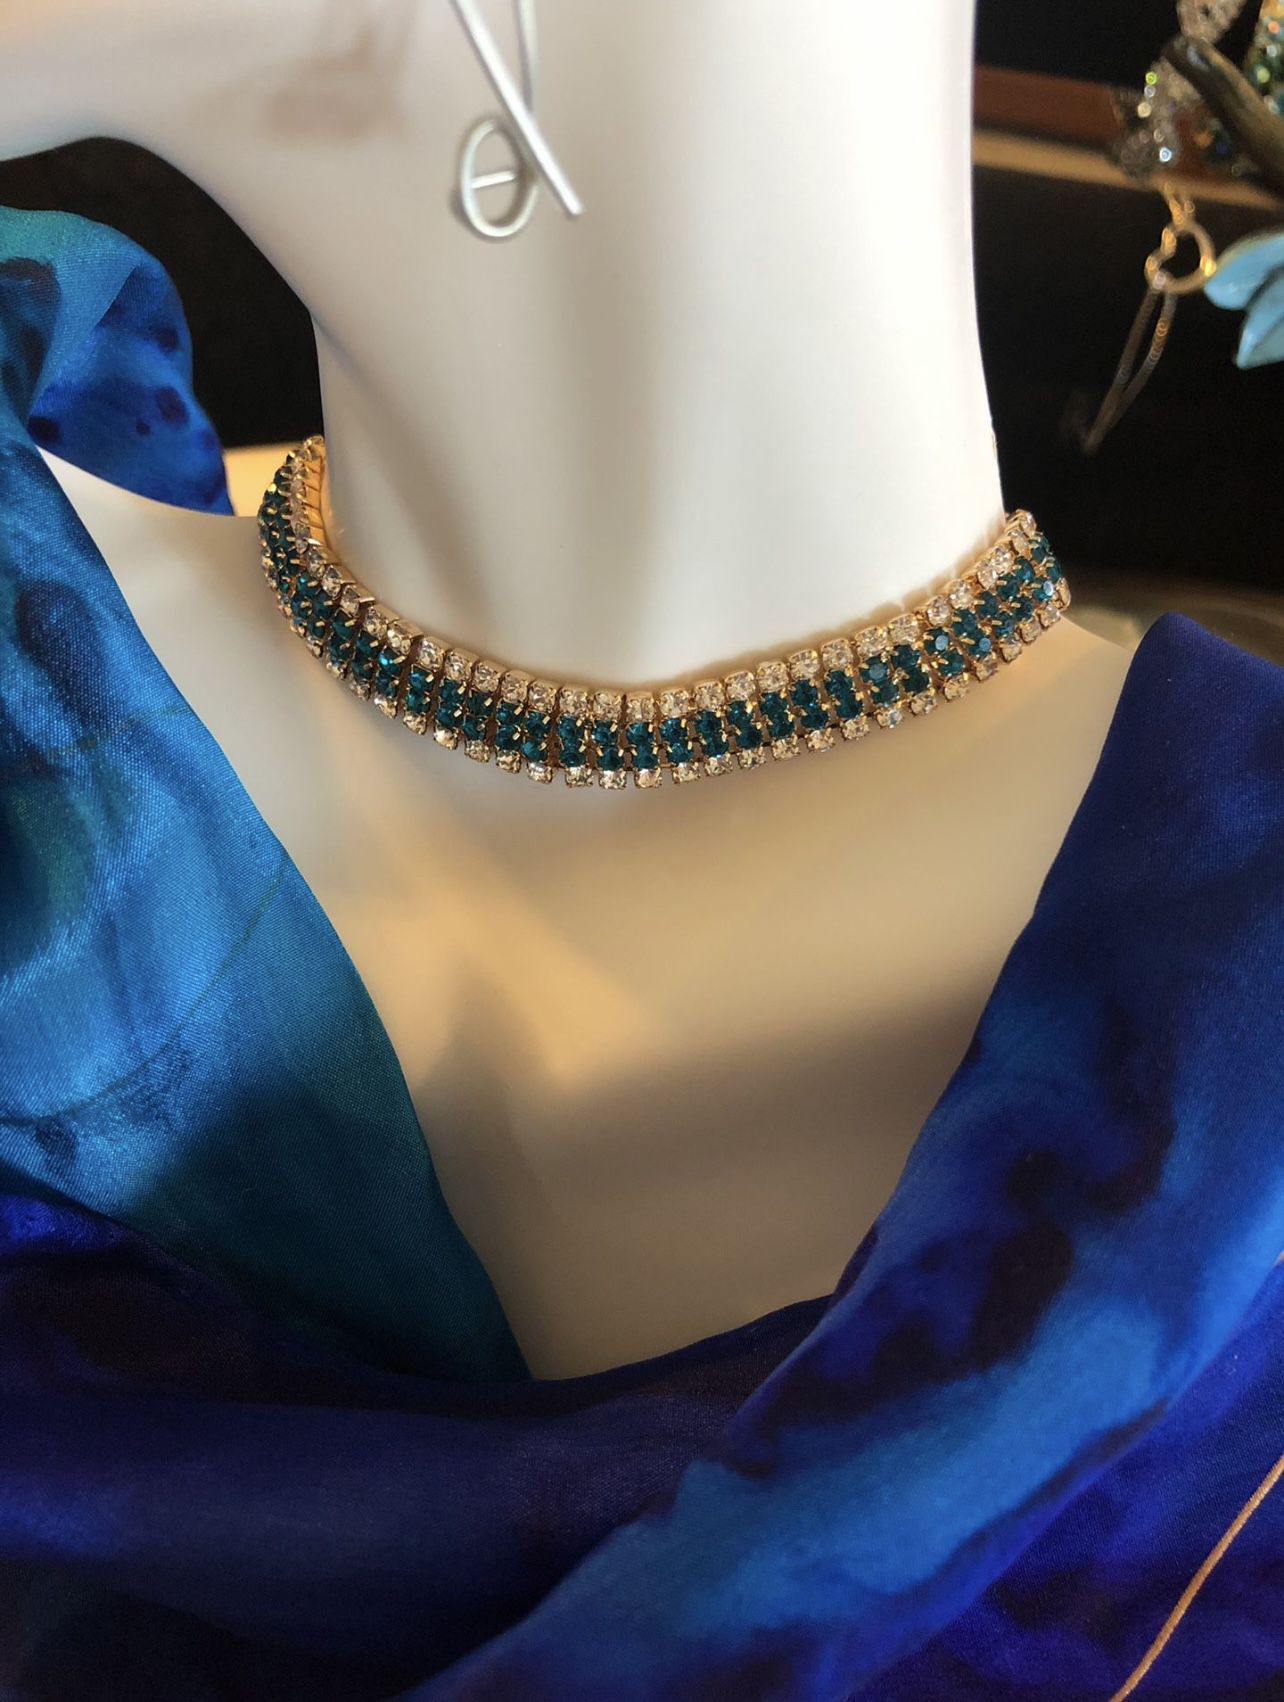 Brand NEW Beautiful Blue Sparkly Bracelet!! 7 1/2” Long